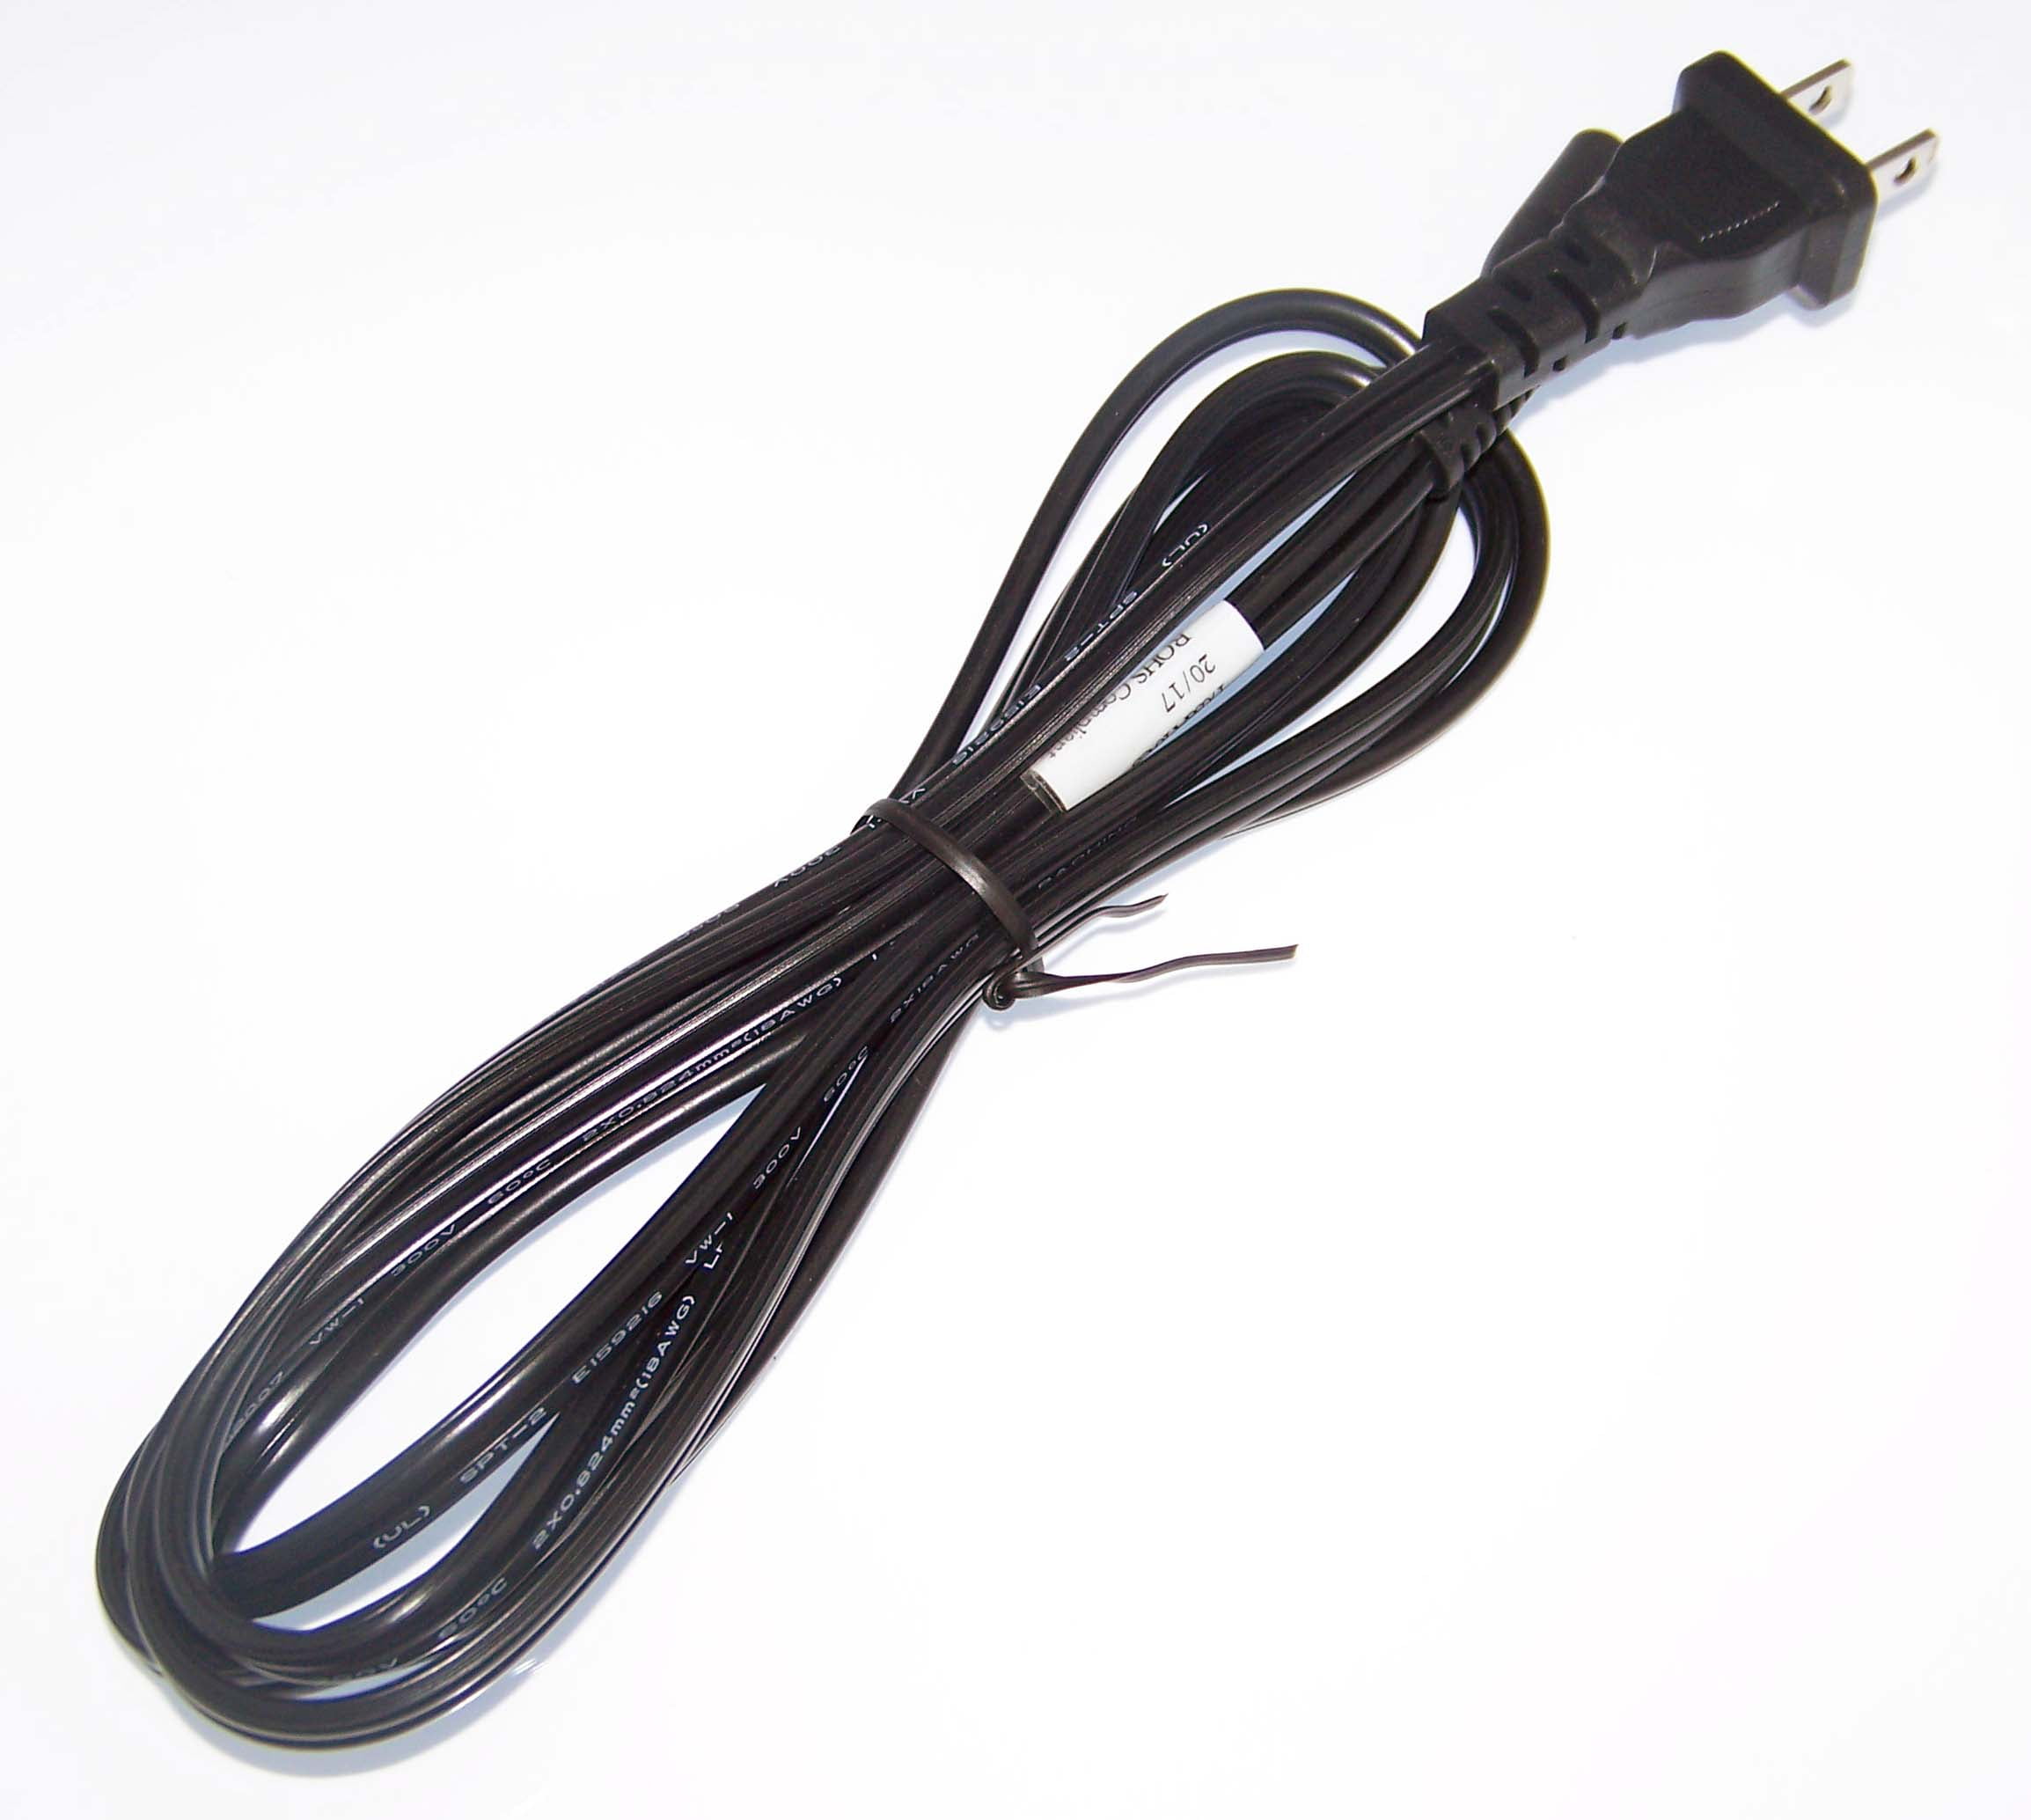 Power Cord fits EPSON Printer Models XP-420 XP-424 XP-520 AC cable 